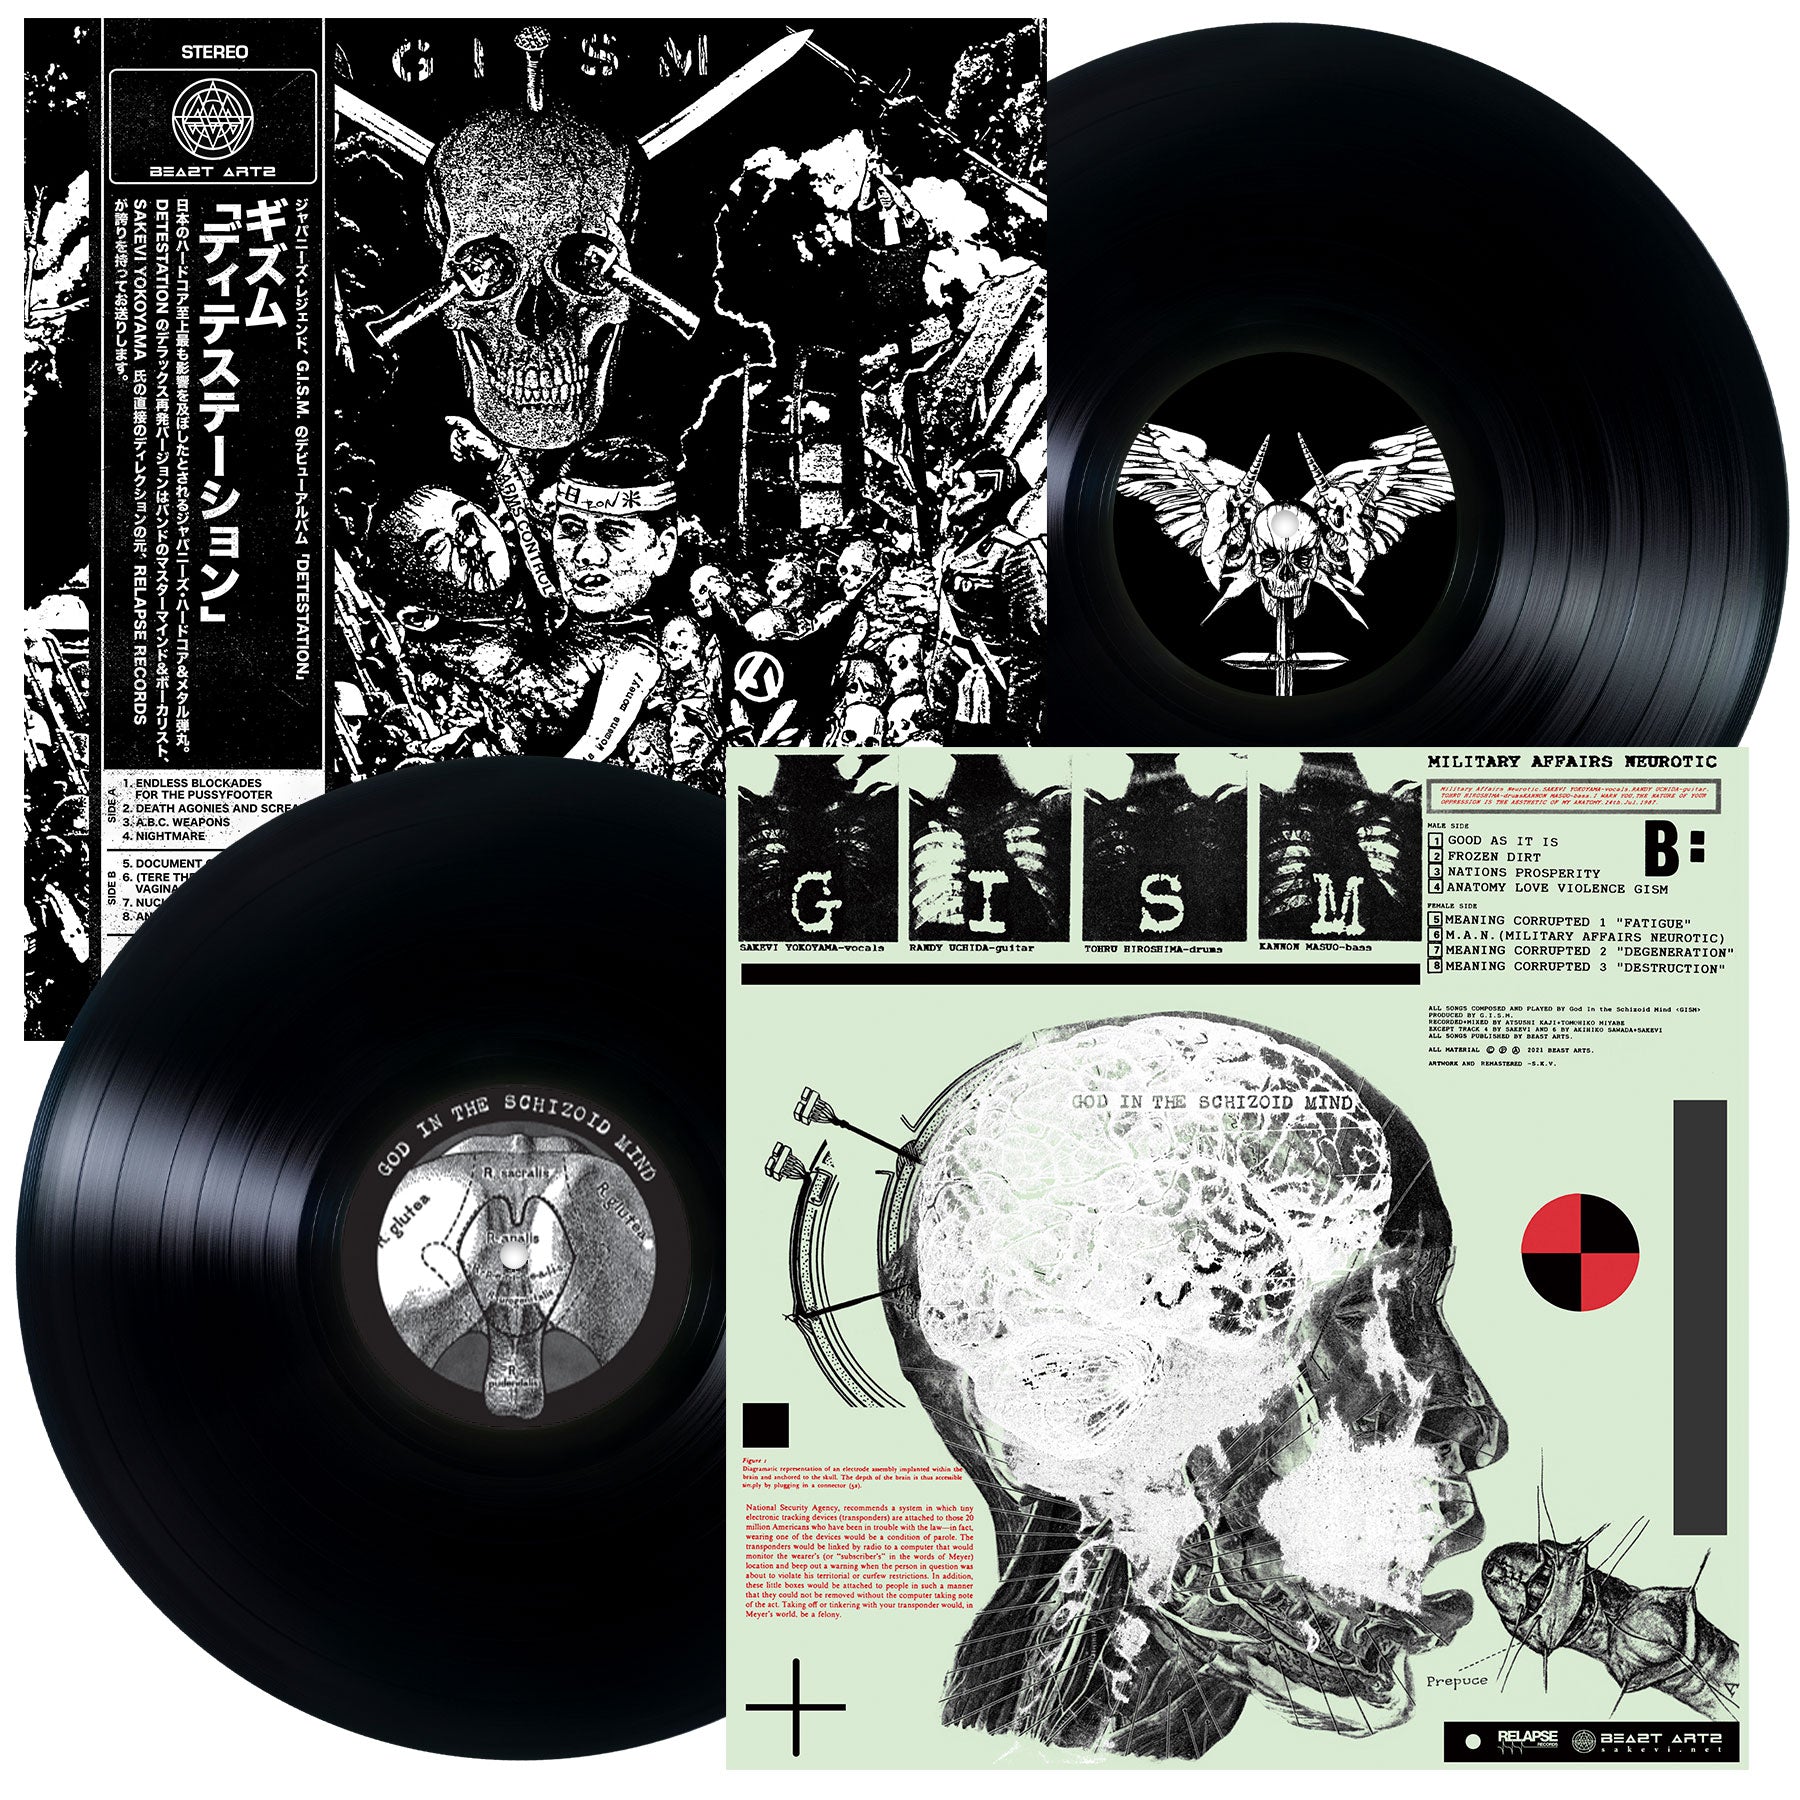 GISM "Military Affairs Neurotic (Reissue) LP + Detestation (Reissue) LP" Bundle